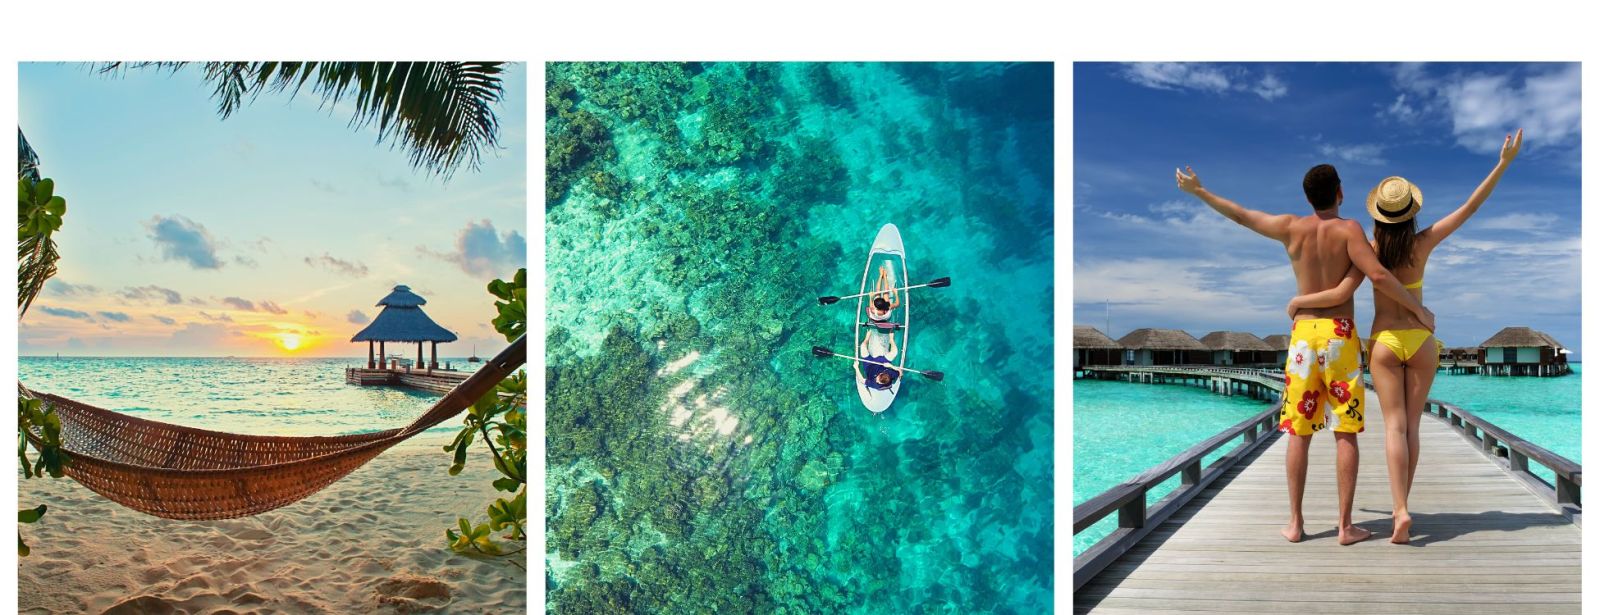 Holiday To The Maldives. Hammocks, Paddle Boarding, Romantic